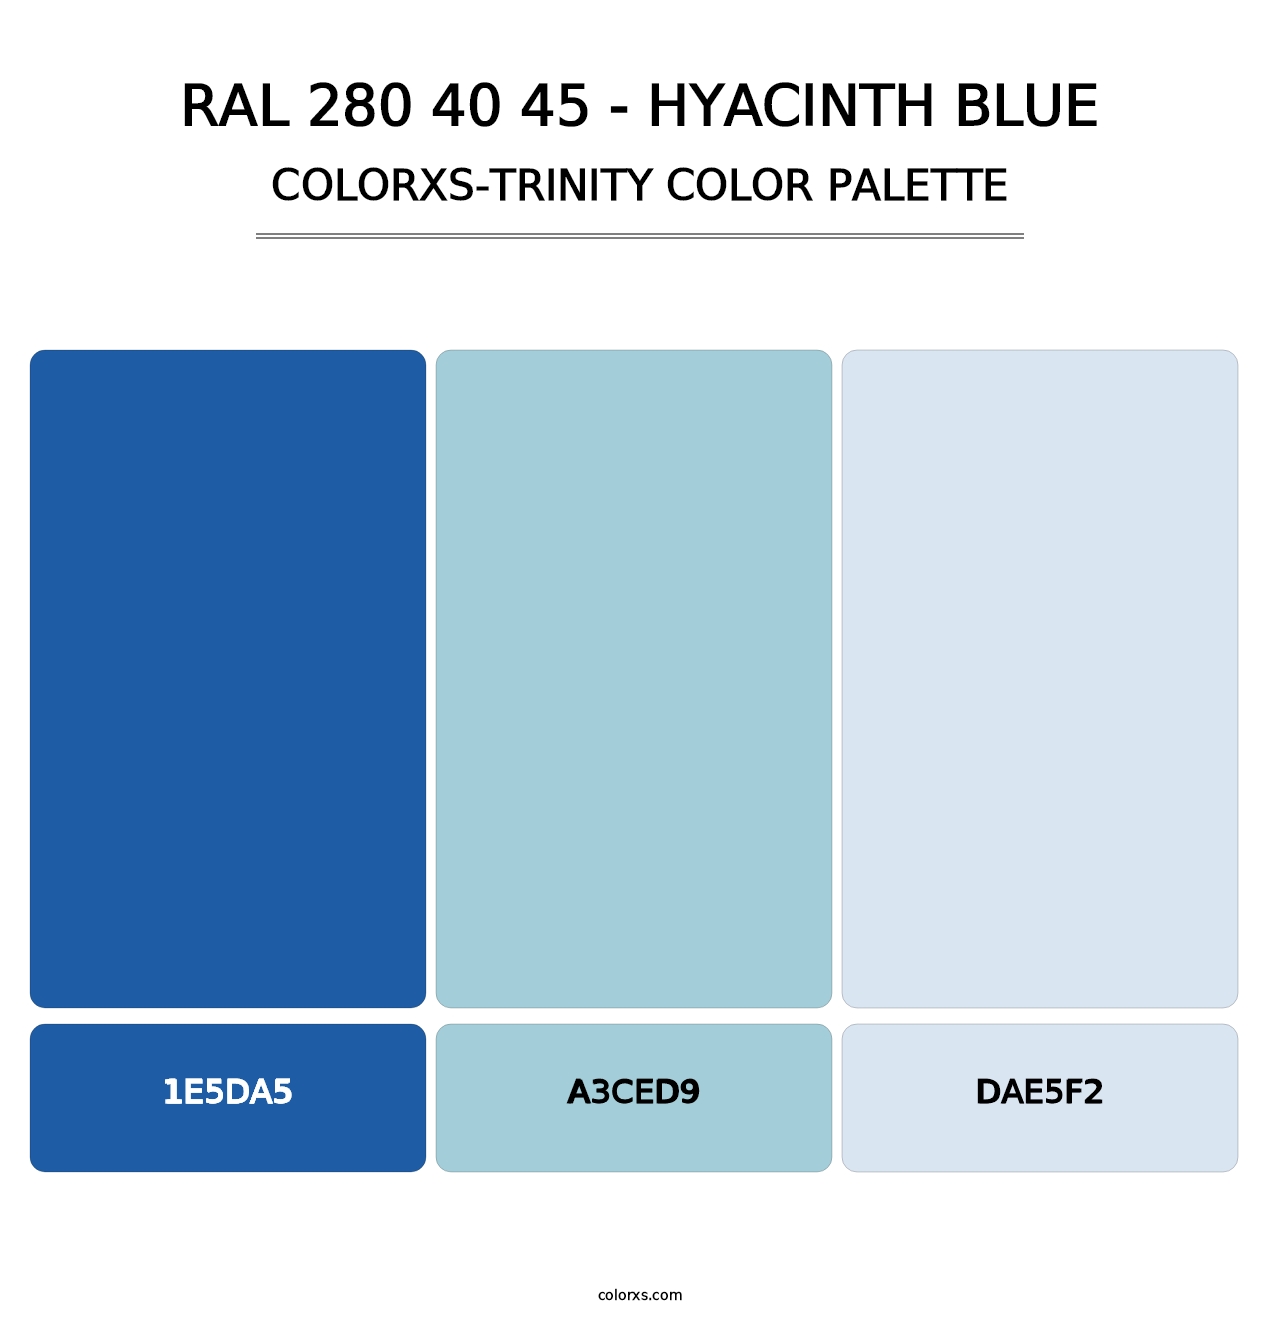 RAL 280 40 45 - Hyacinth Blue - Colorxs Trinity Palette